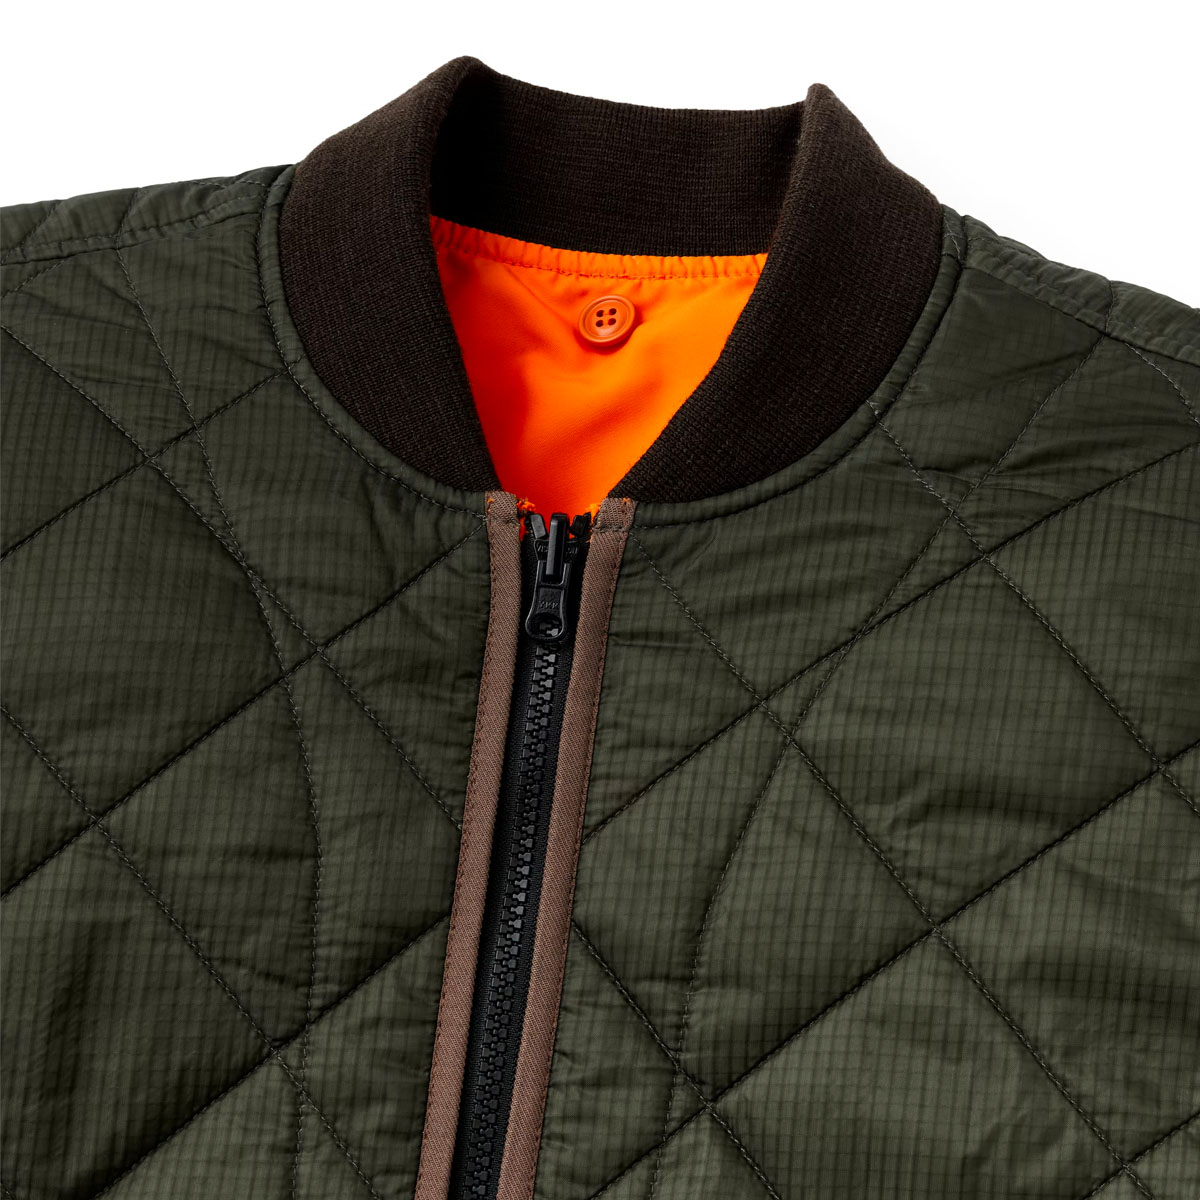 Filson Eagle Plains Jacket Liner, fabulous jacket for mild days and an ...